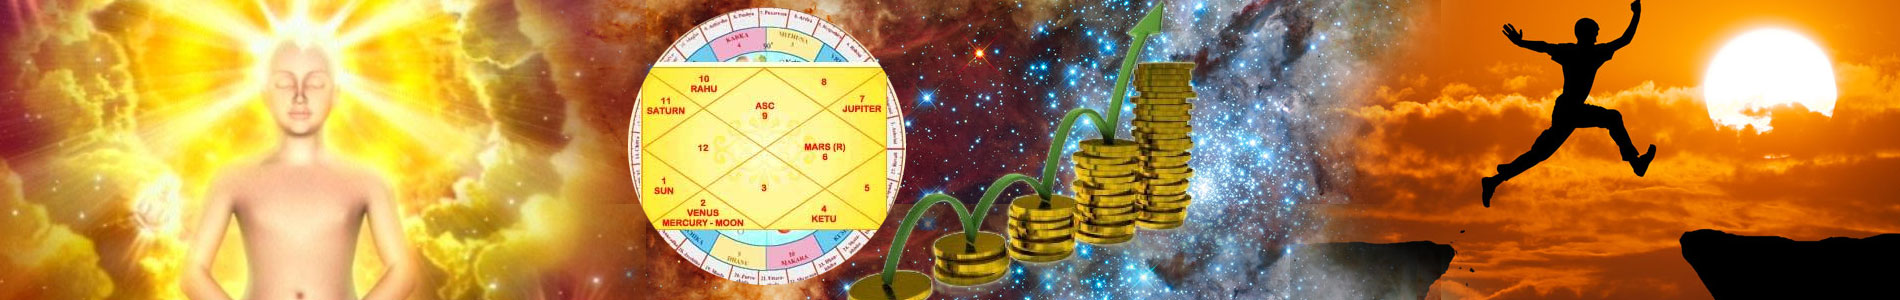 astrology predictions based on bhrigu samhita